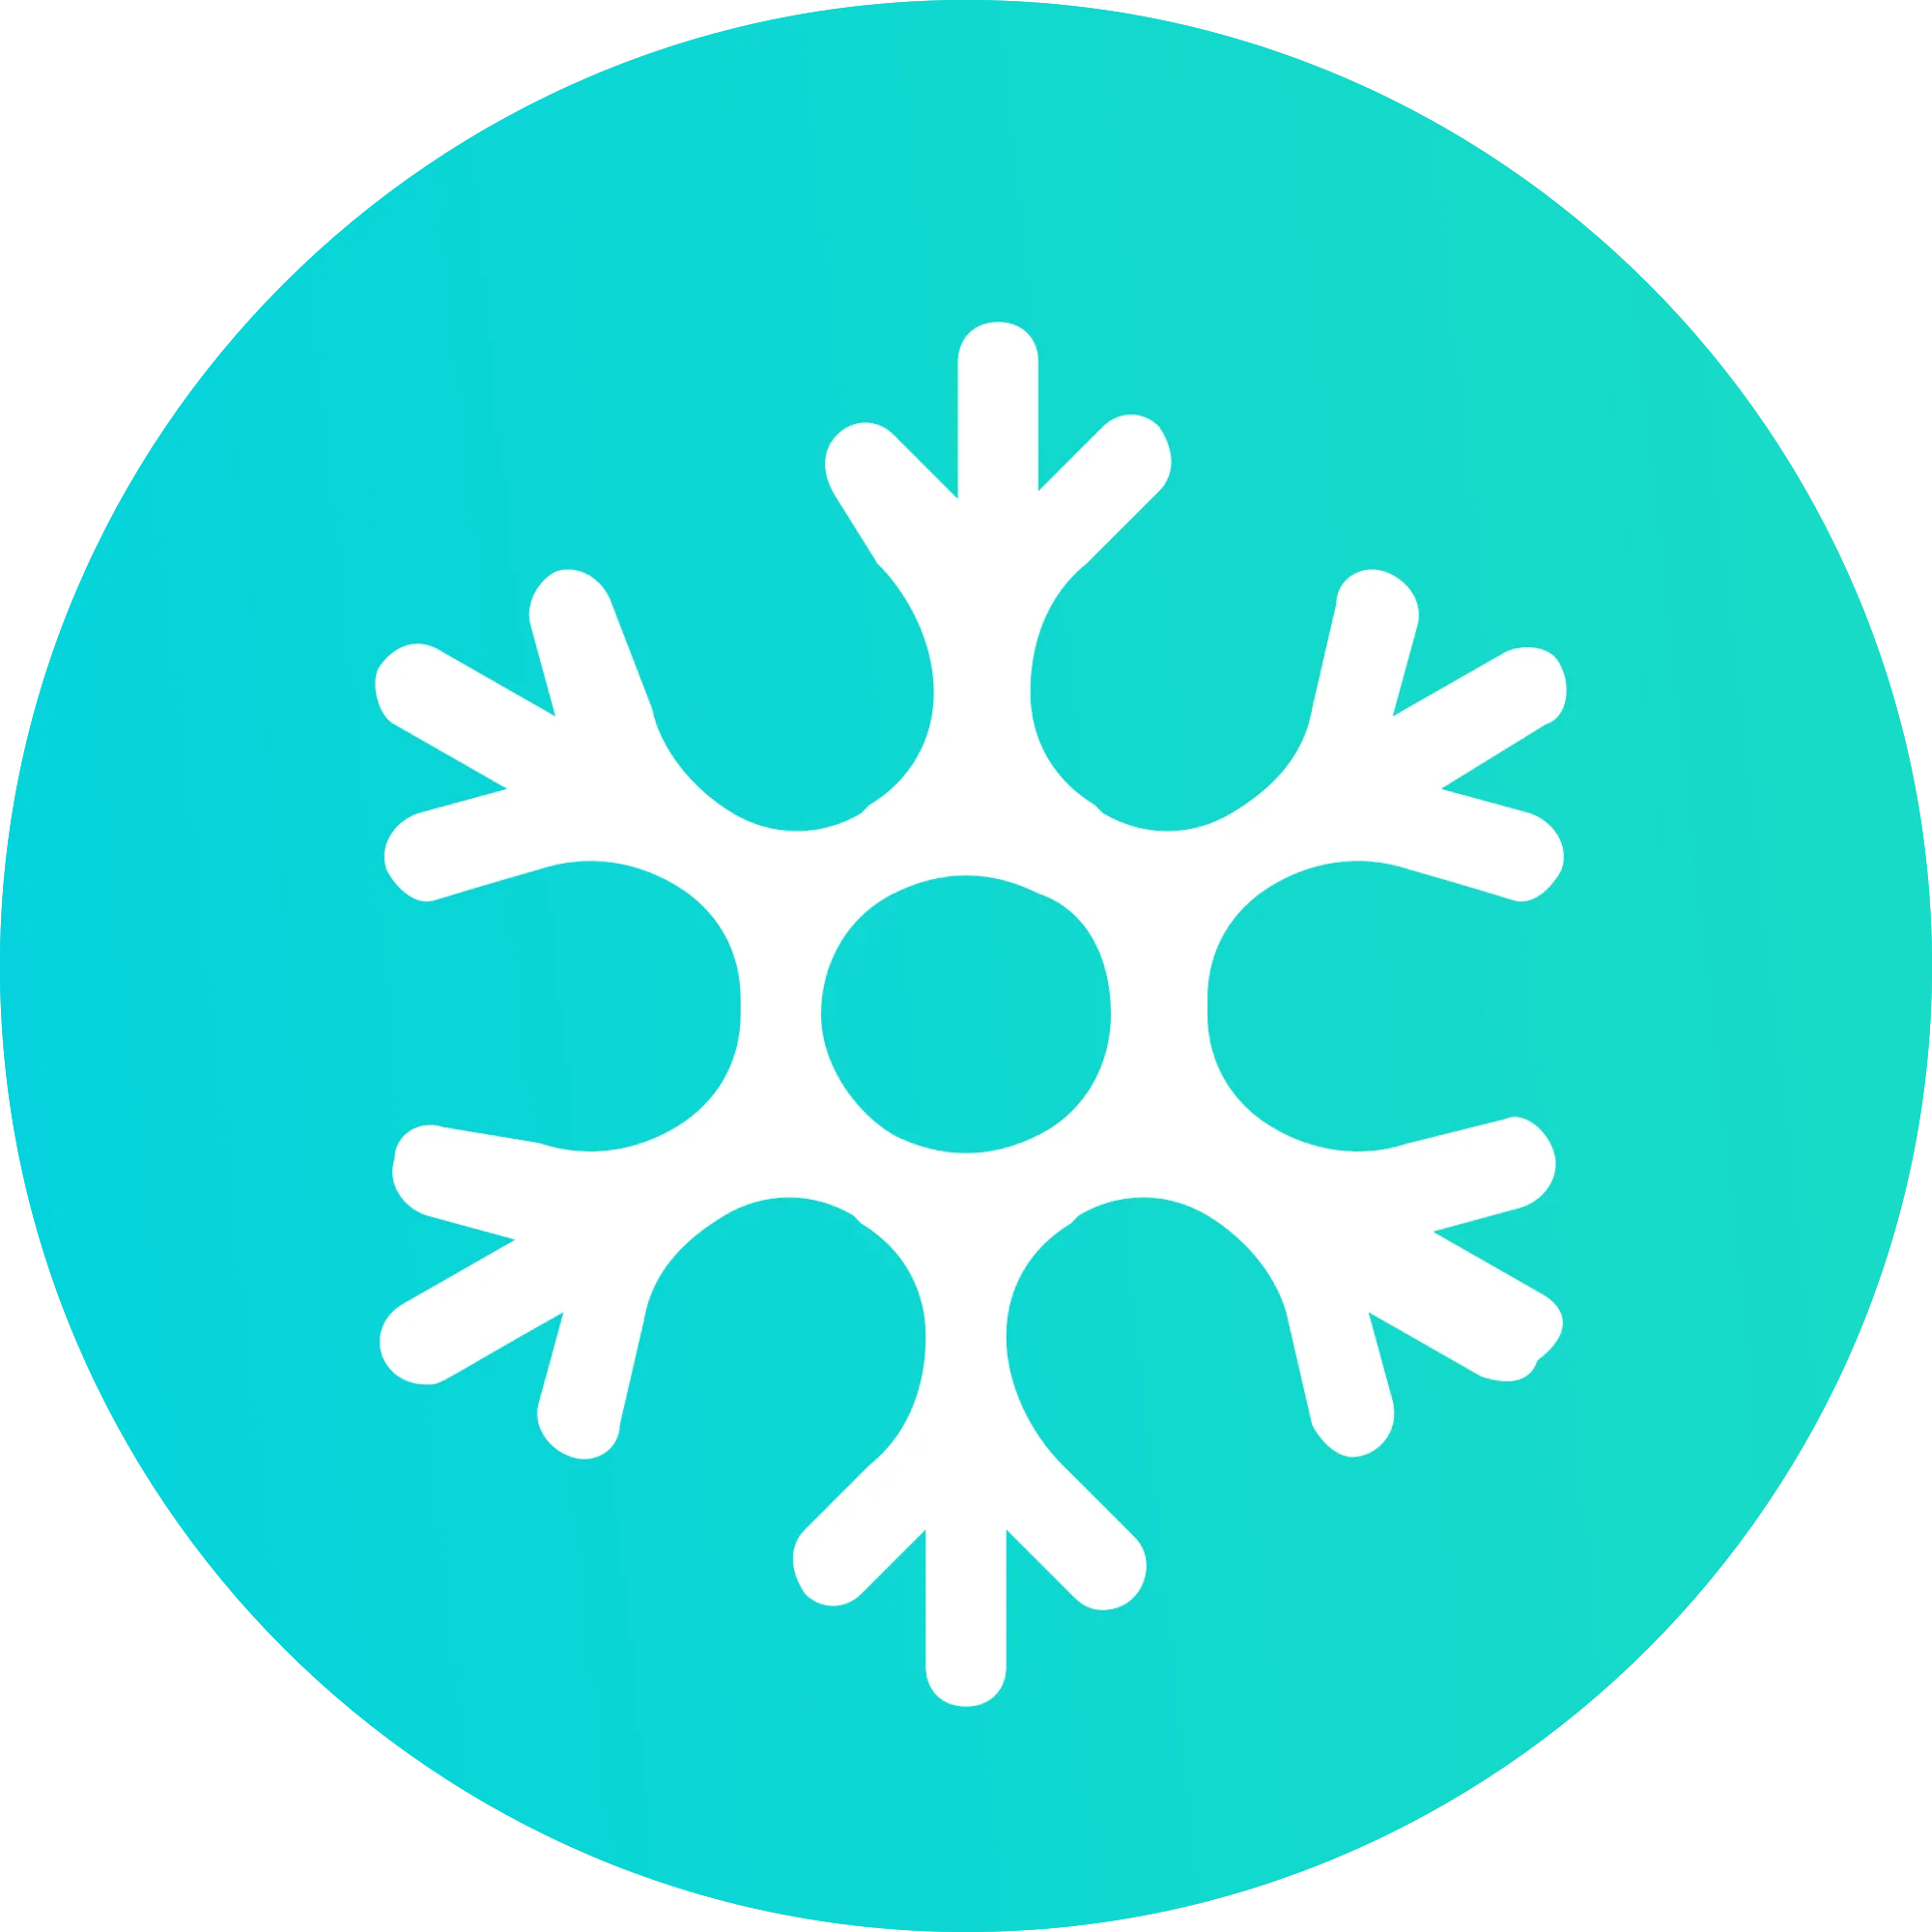 SnowSwap logo in png format